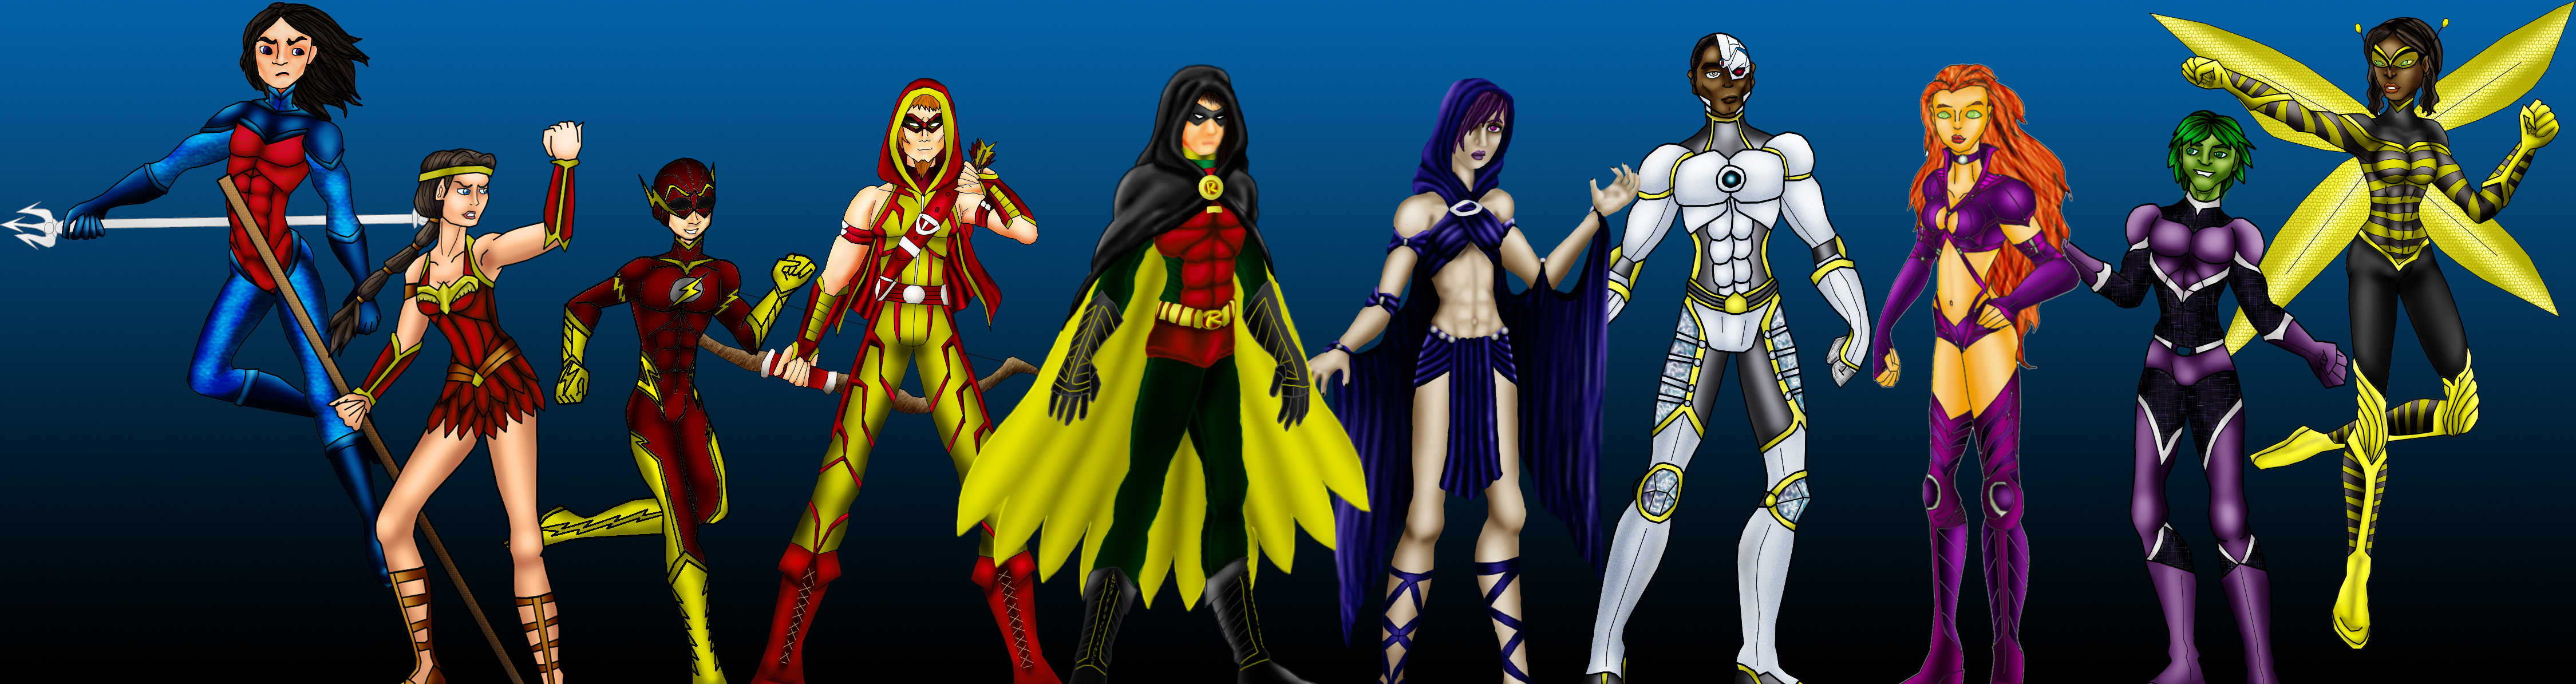 Teen_Titans_roster_by_Valor1387.jpg